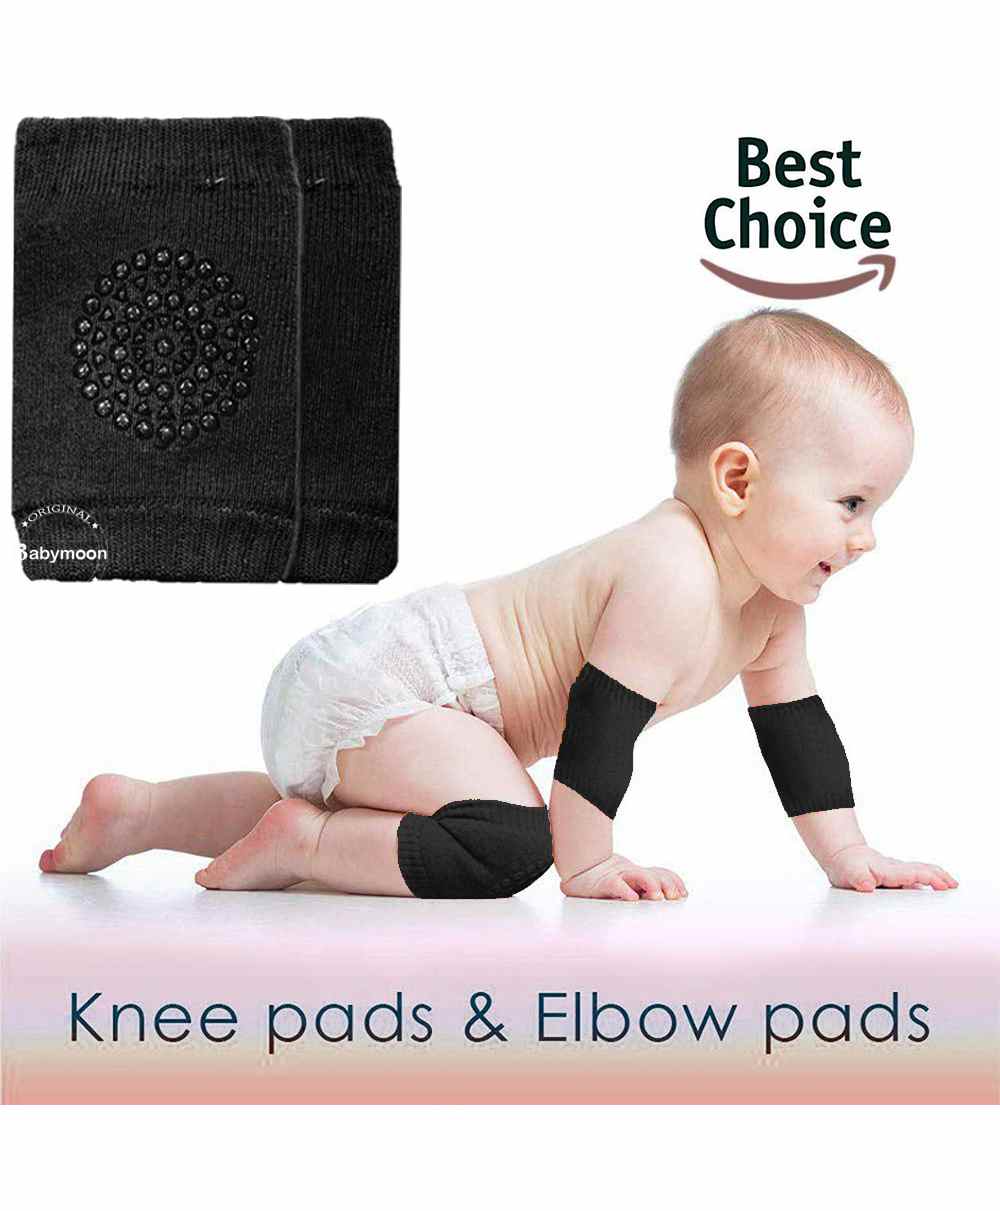 Babymoon Baby Kids Knee Pads AntiSlip Stretchable Knee Cap Elbow Safety - Black